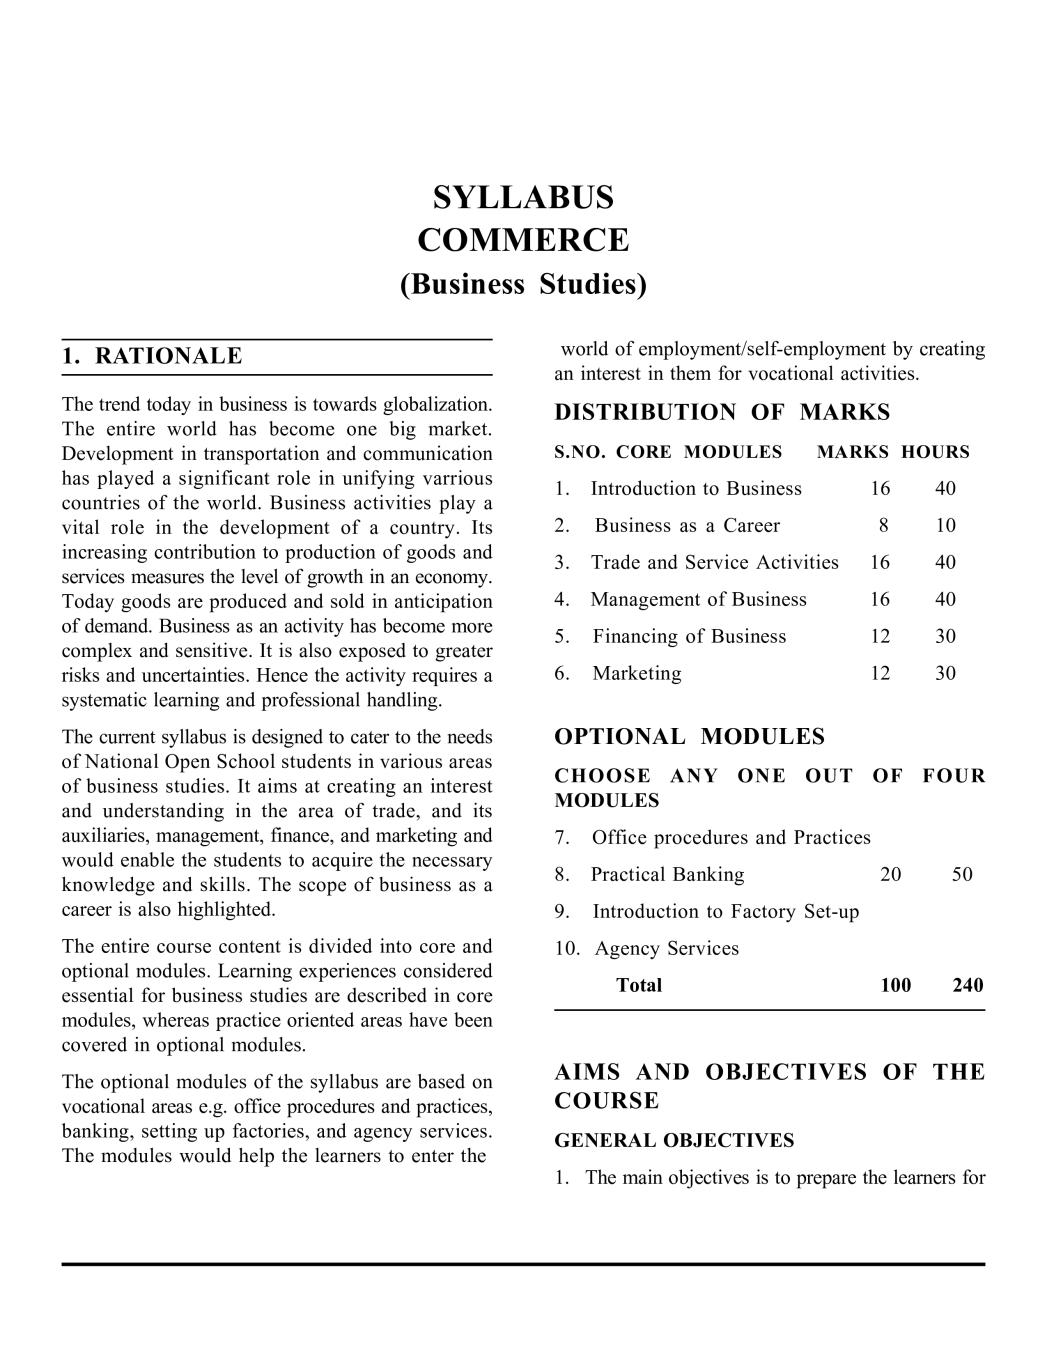 NIOS Class 12 Syllabus - Business Studies - Page 1